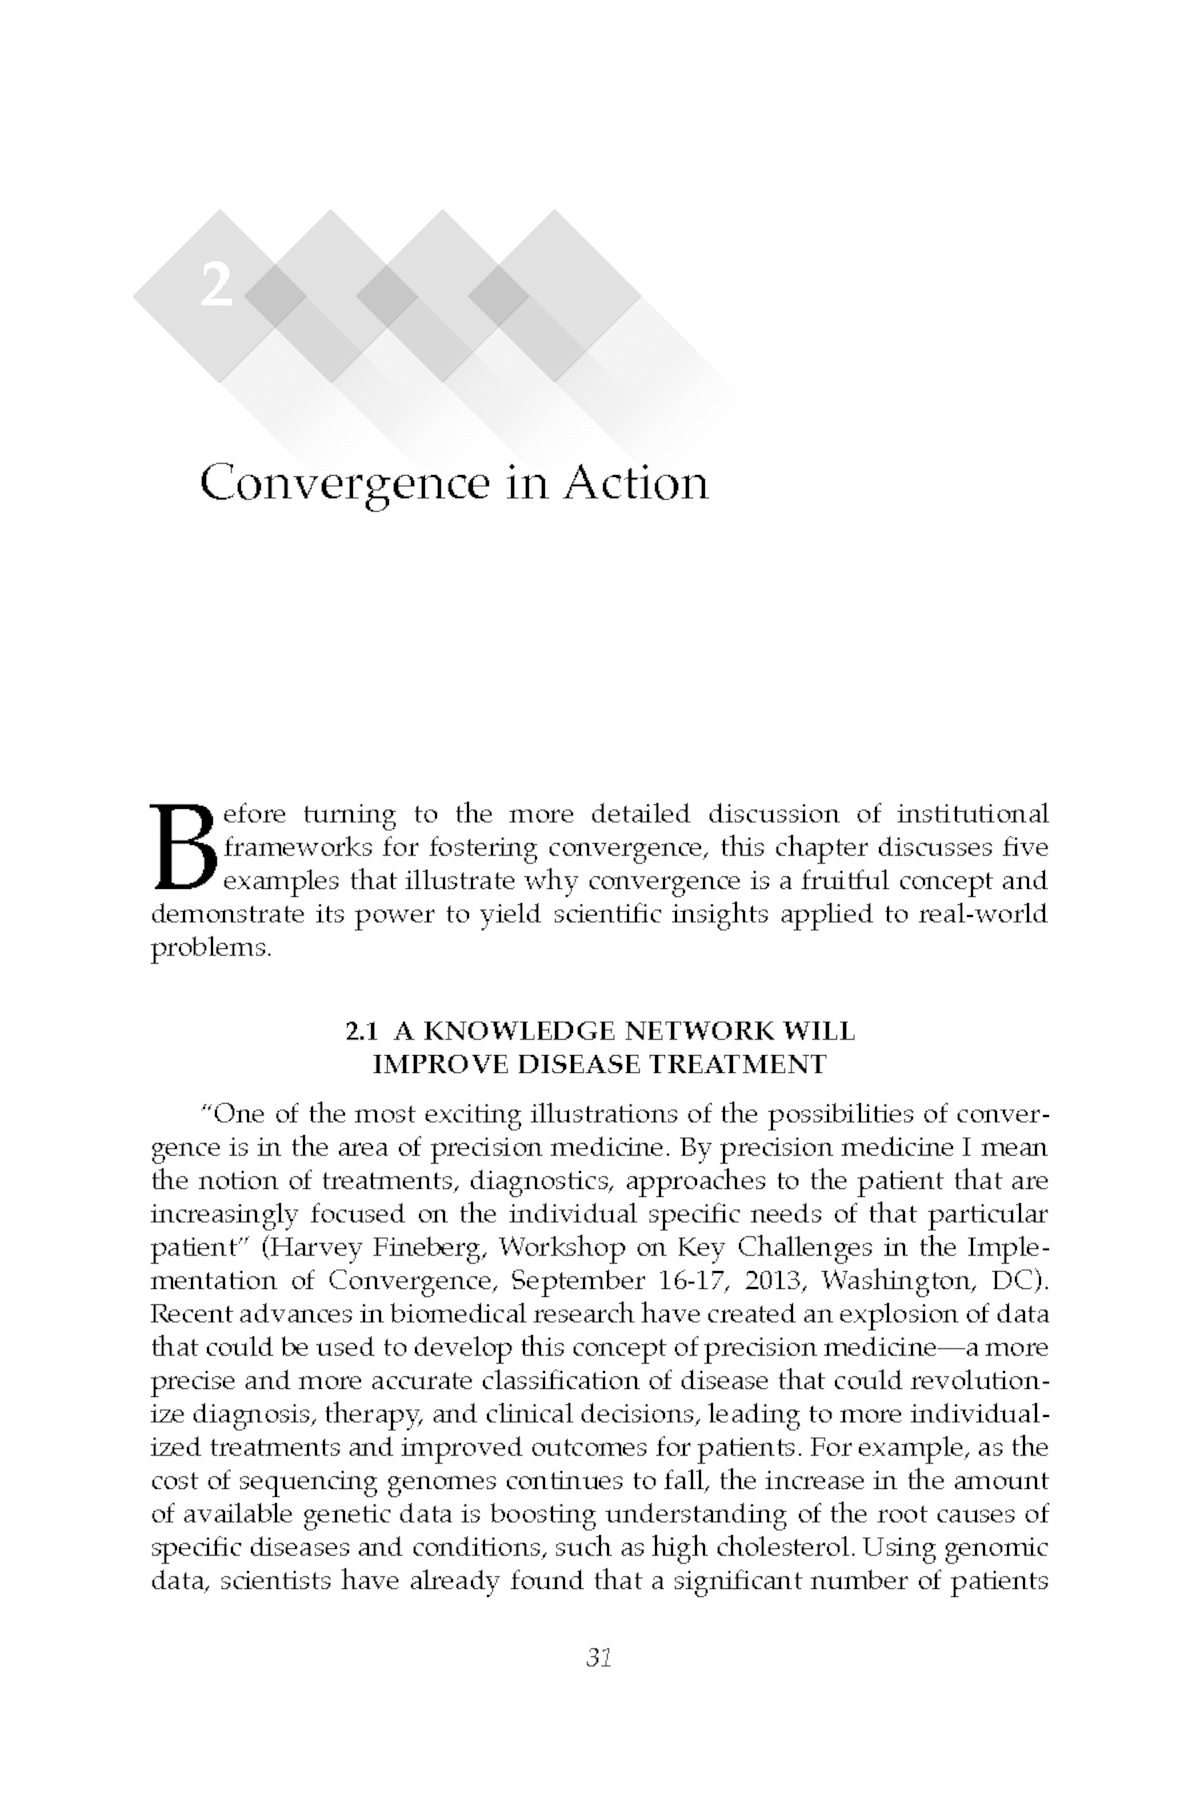 levitt convergence thesis